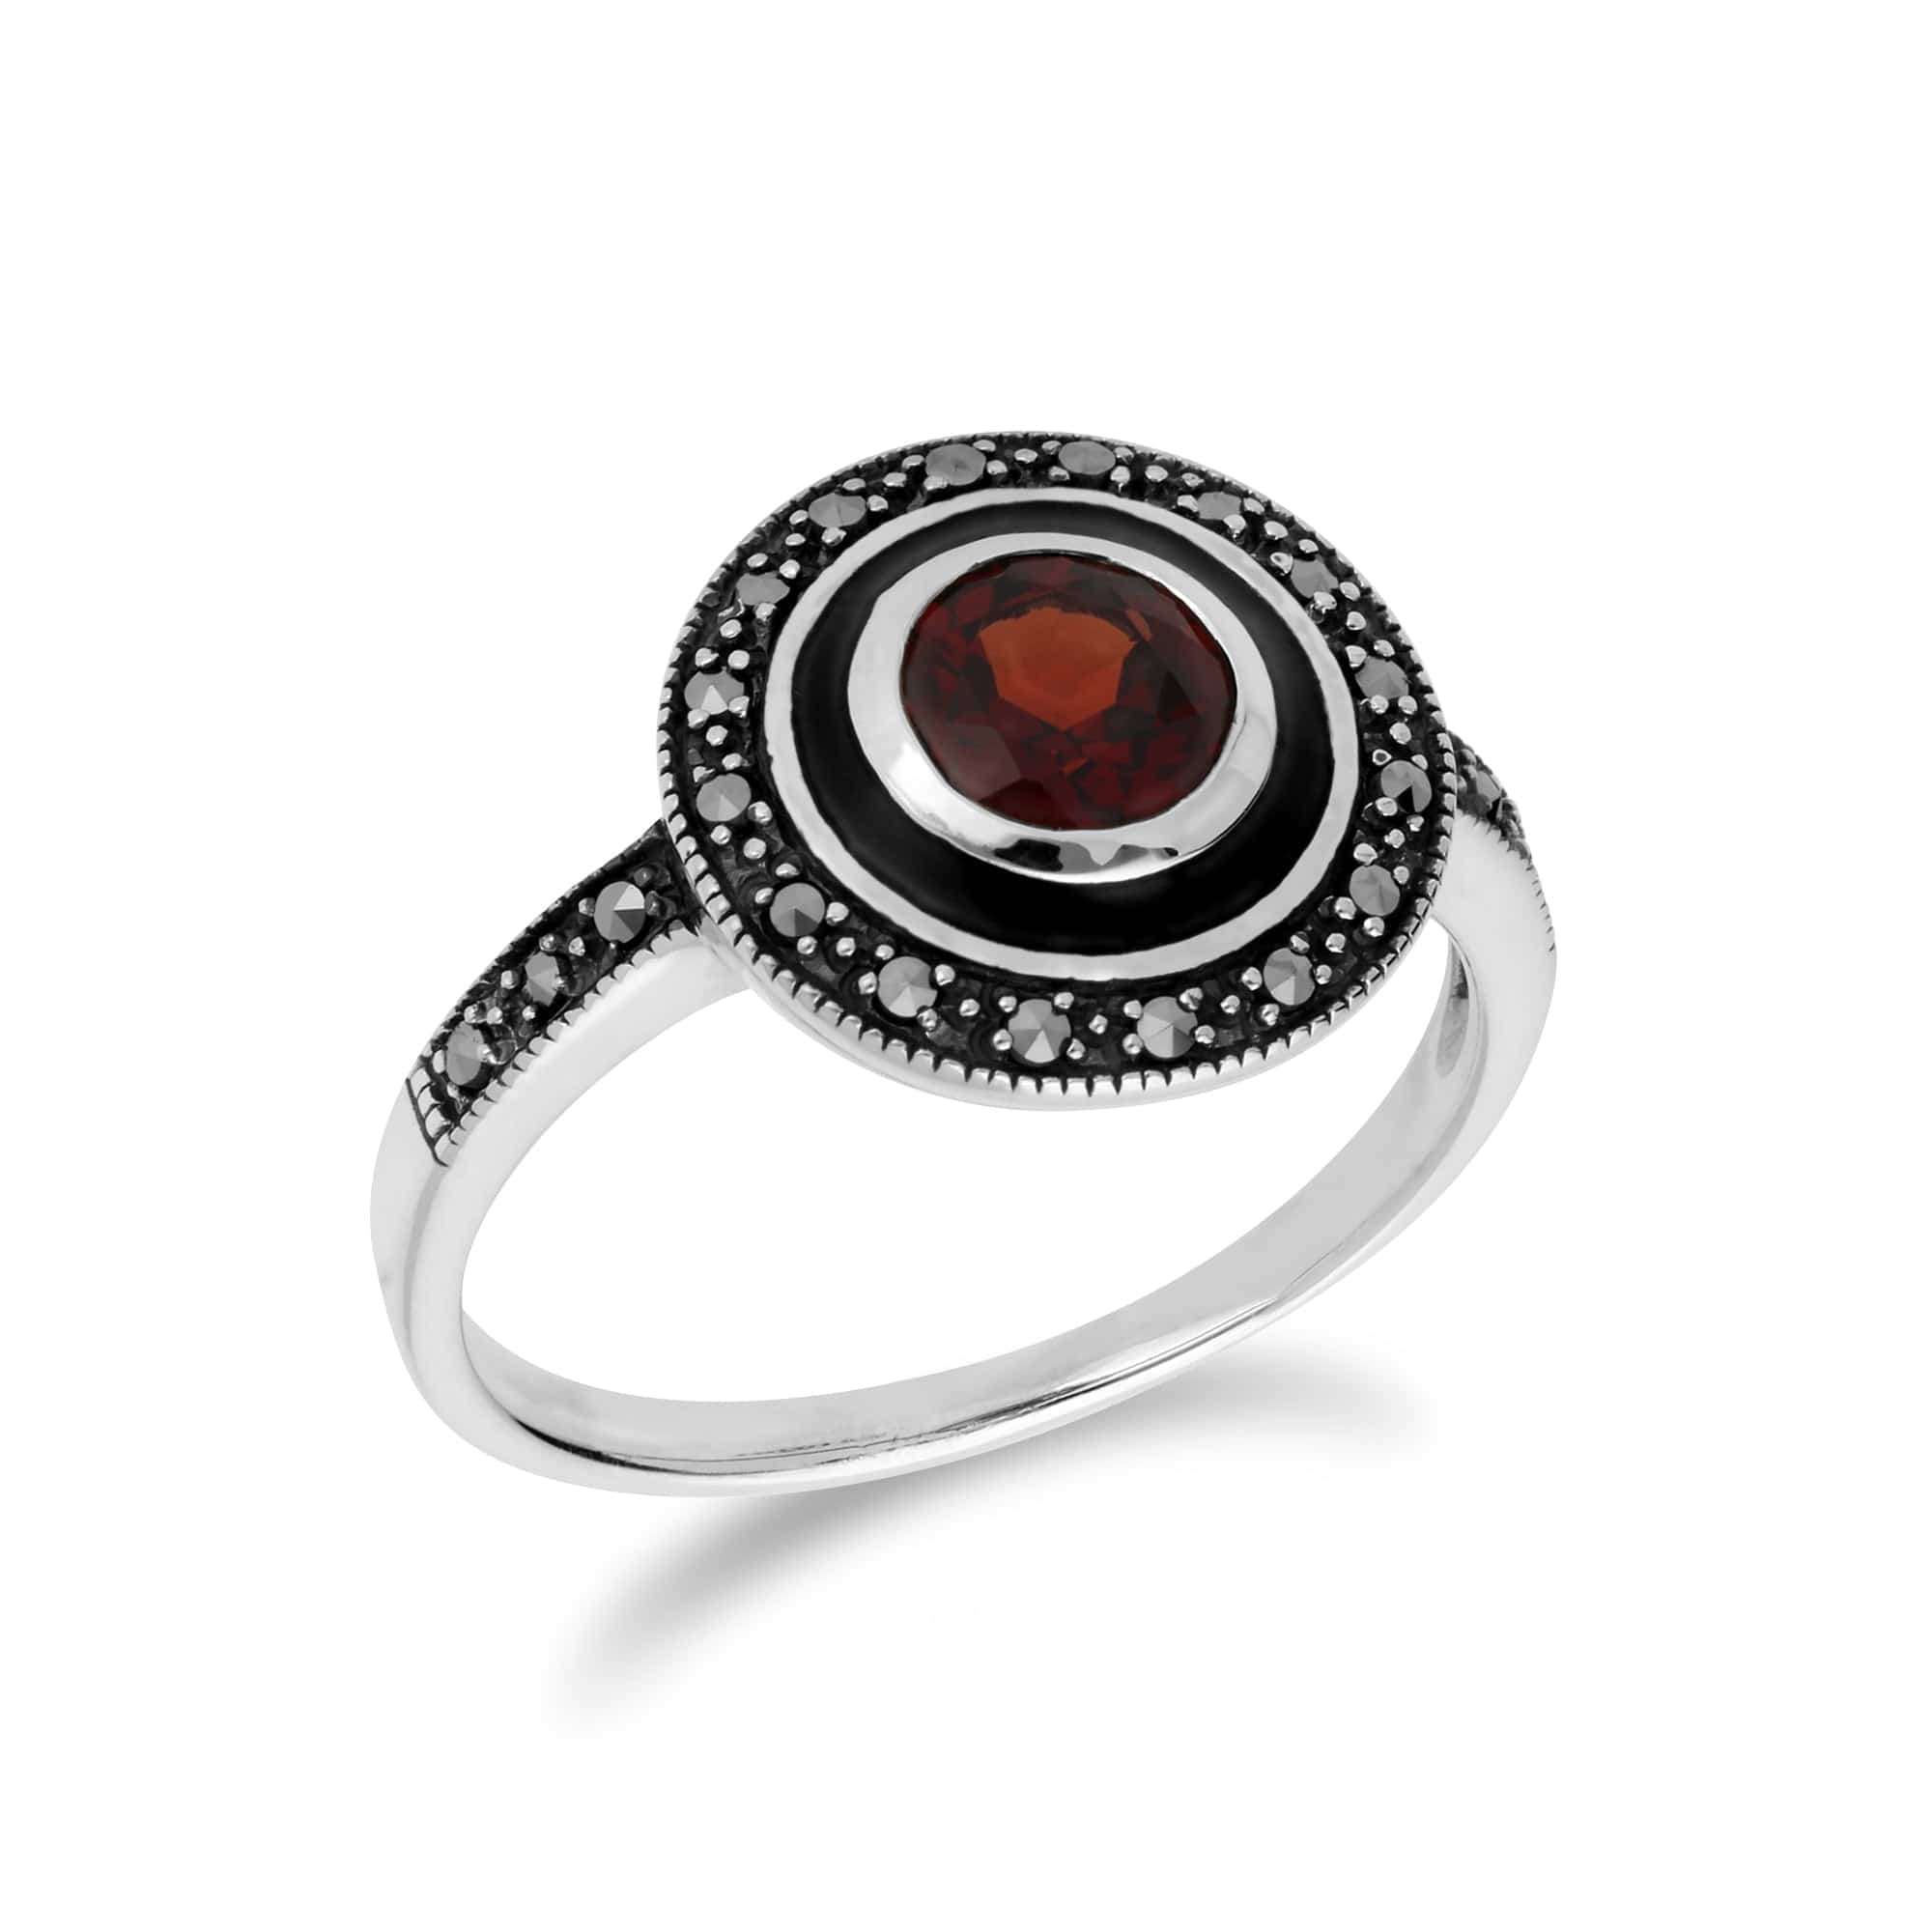 Art Deco Style Round Garnet & Black Enamel Halo Ring in 925 Sterling Silver - Gemondo